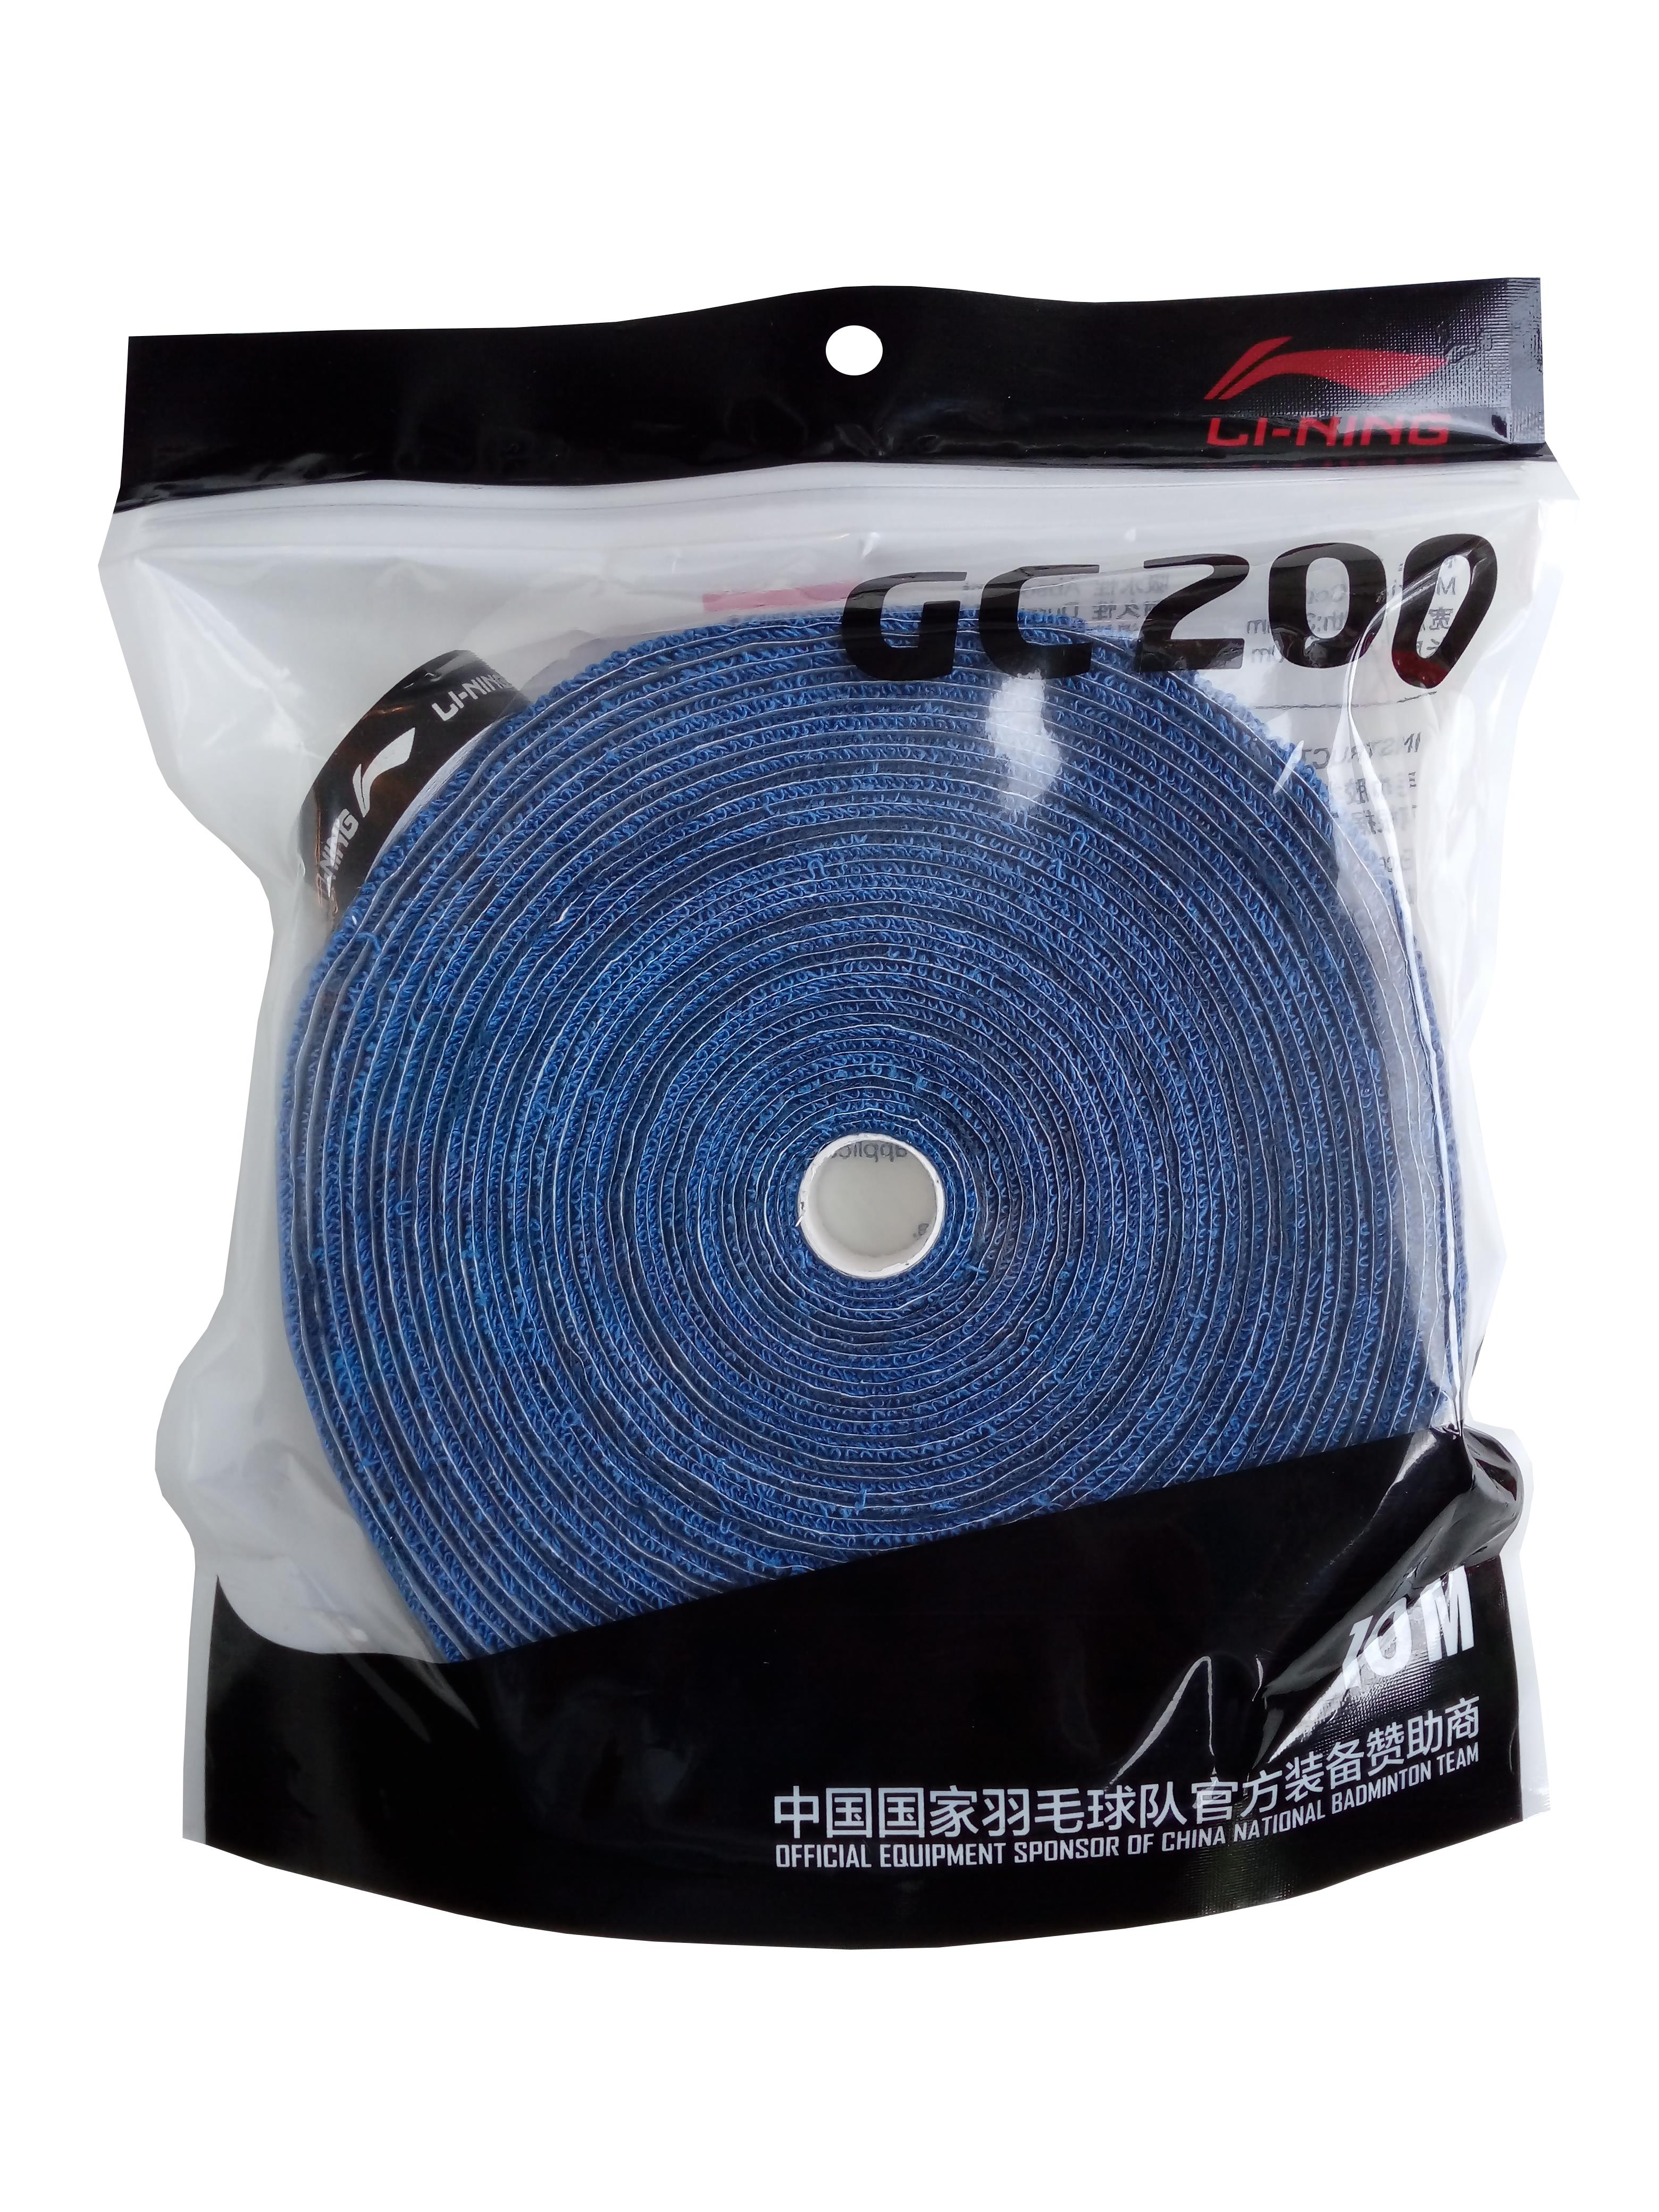 Li-Ning Premium Frotteegriffband Towel Grip Badminton Schläger Griff-Band blau